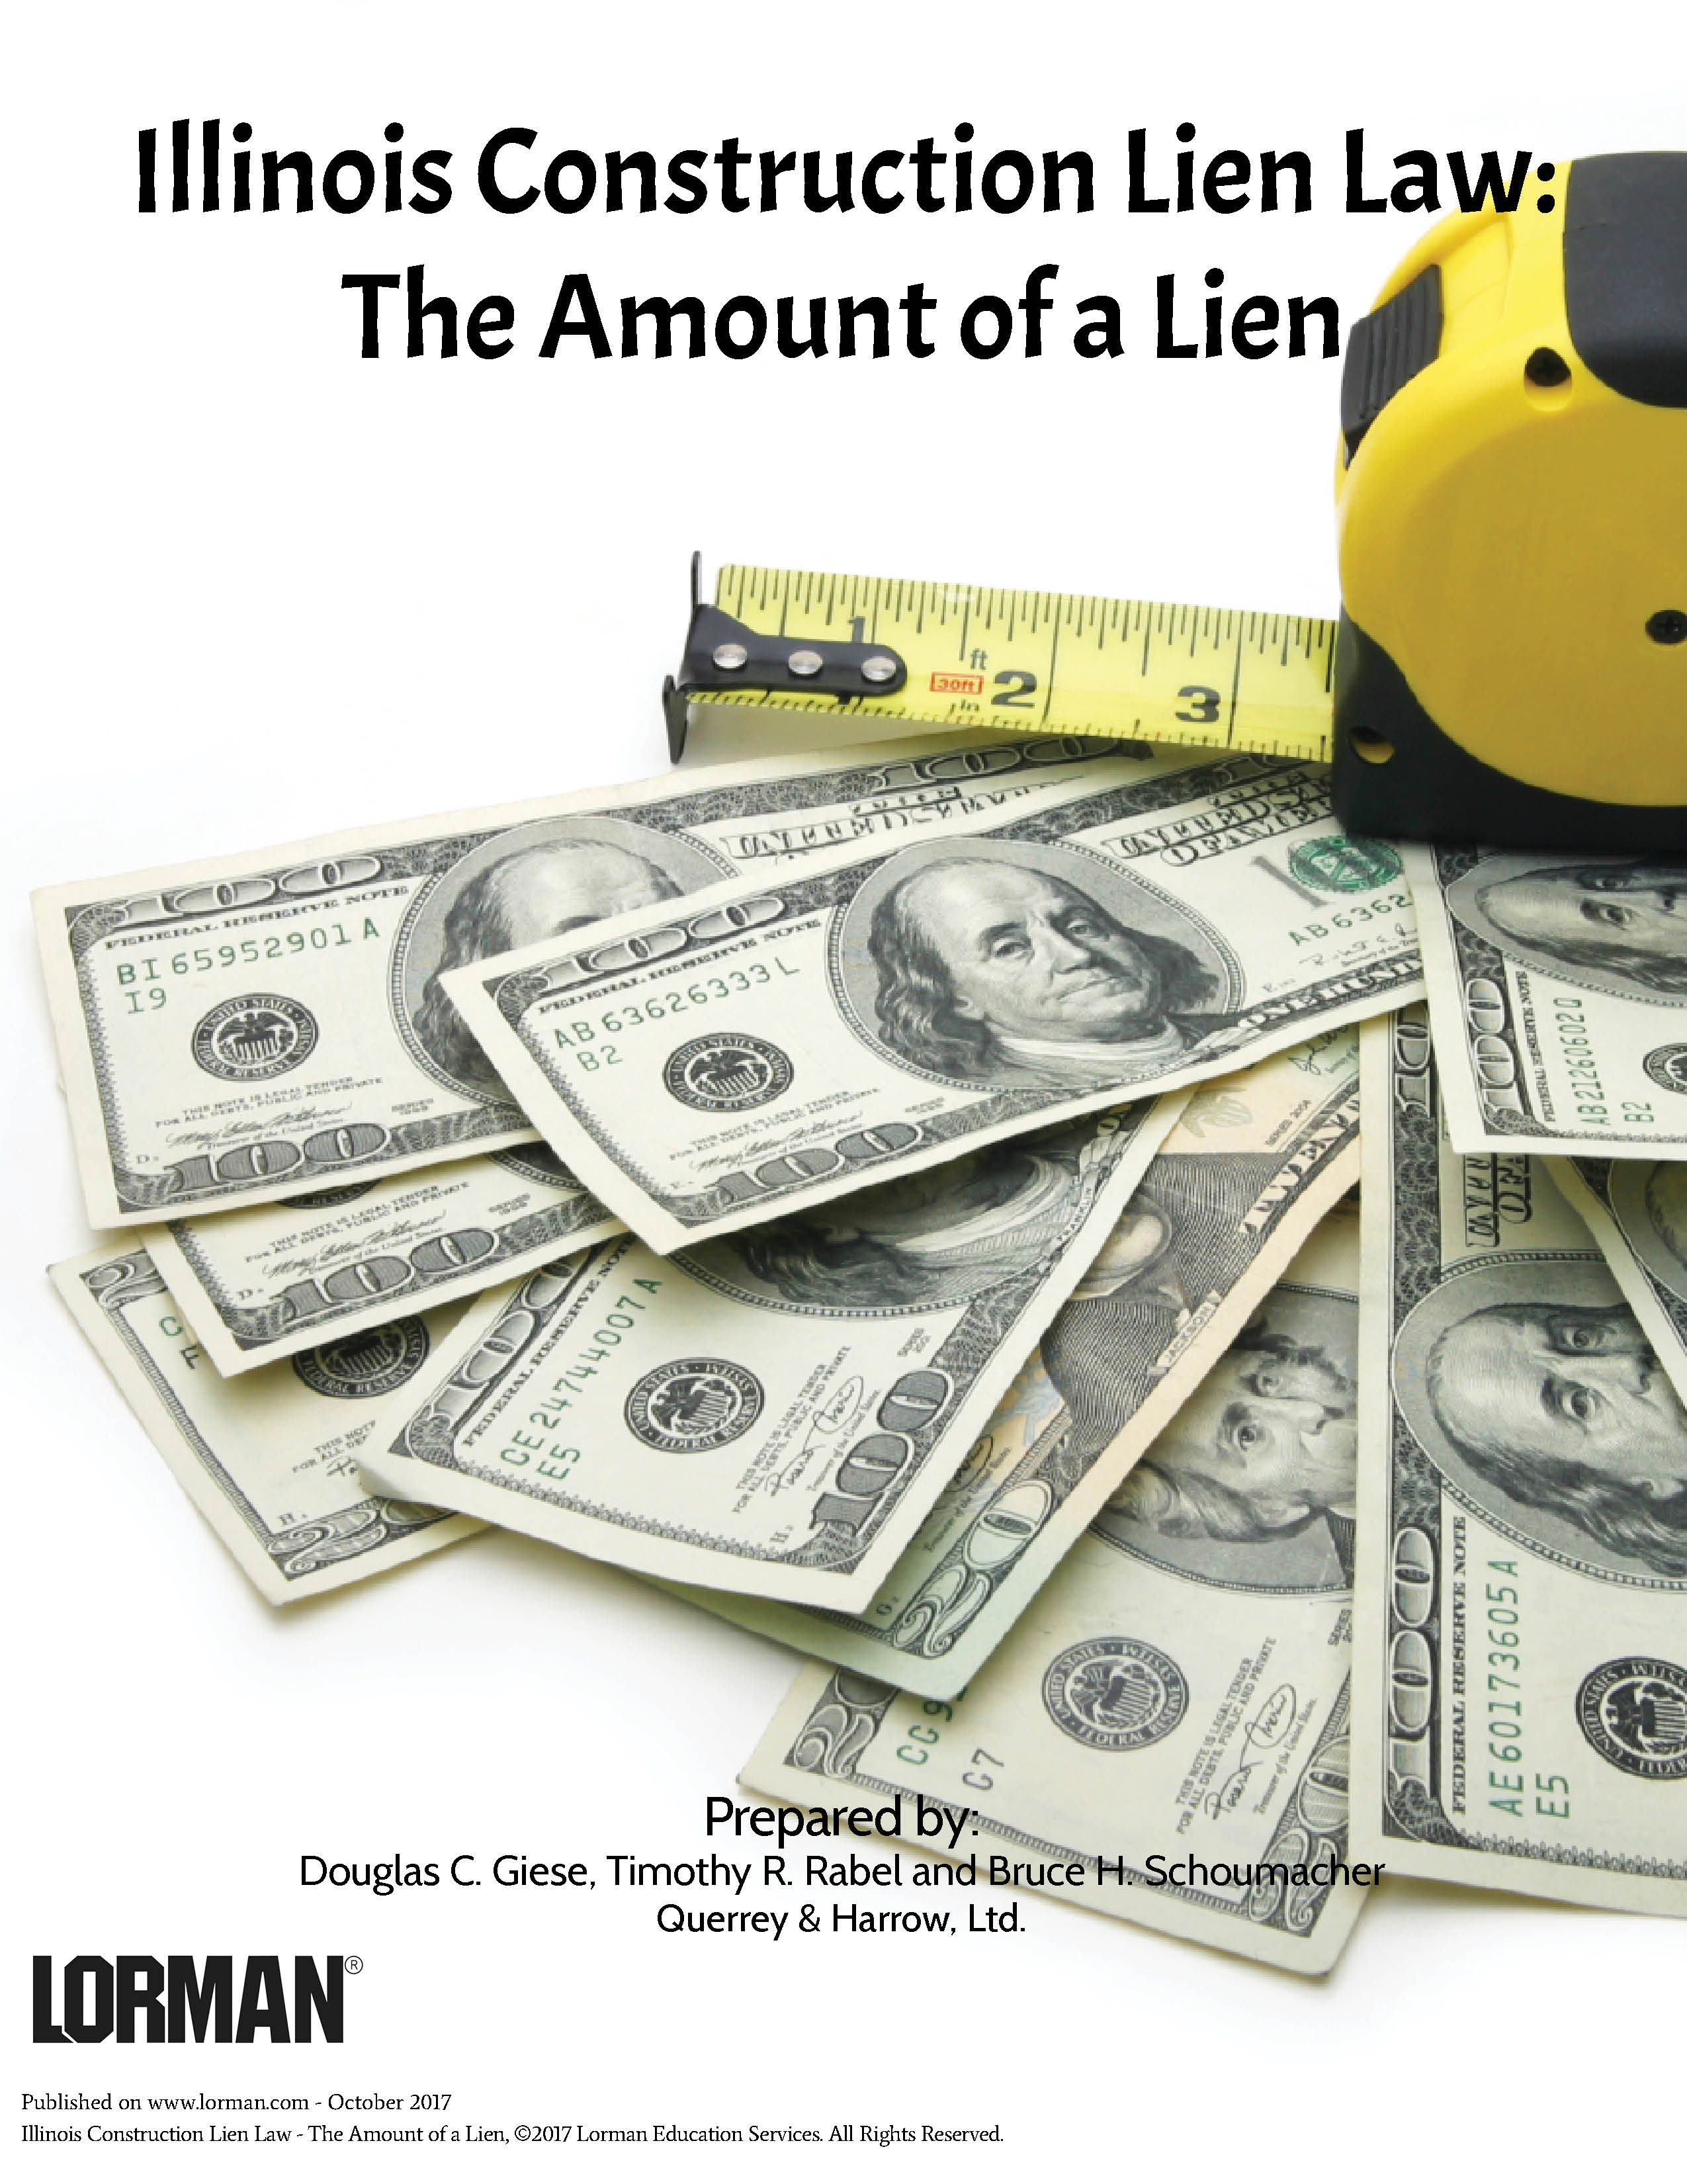 Illinois Construction Lien Law - The Amount of a Lien